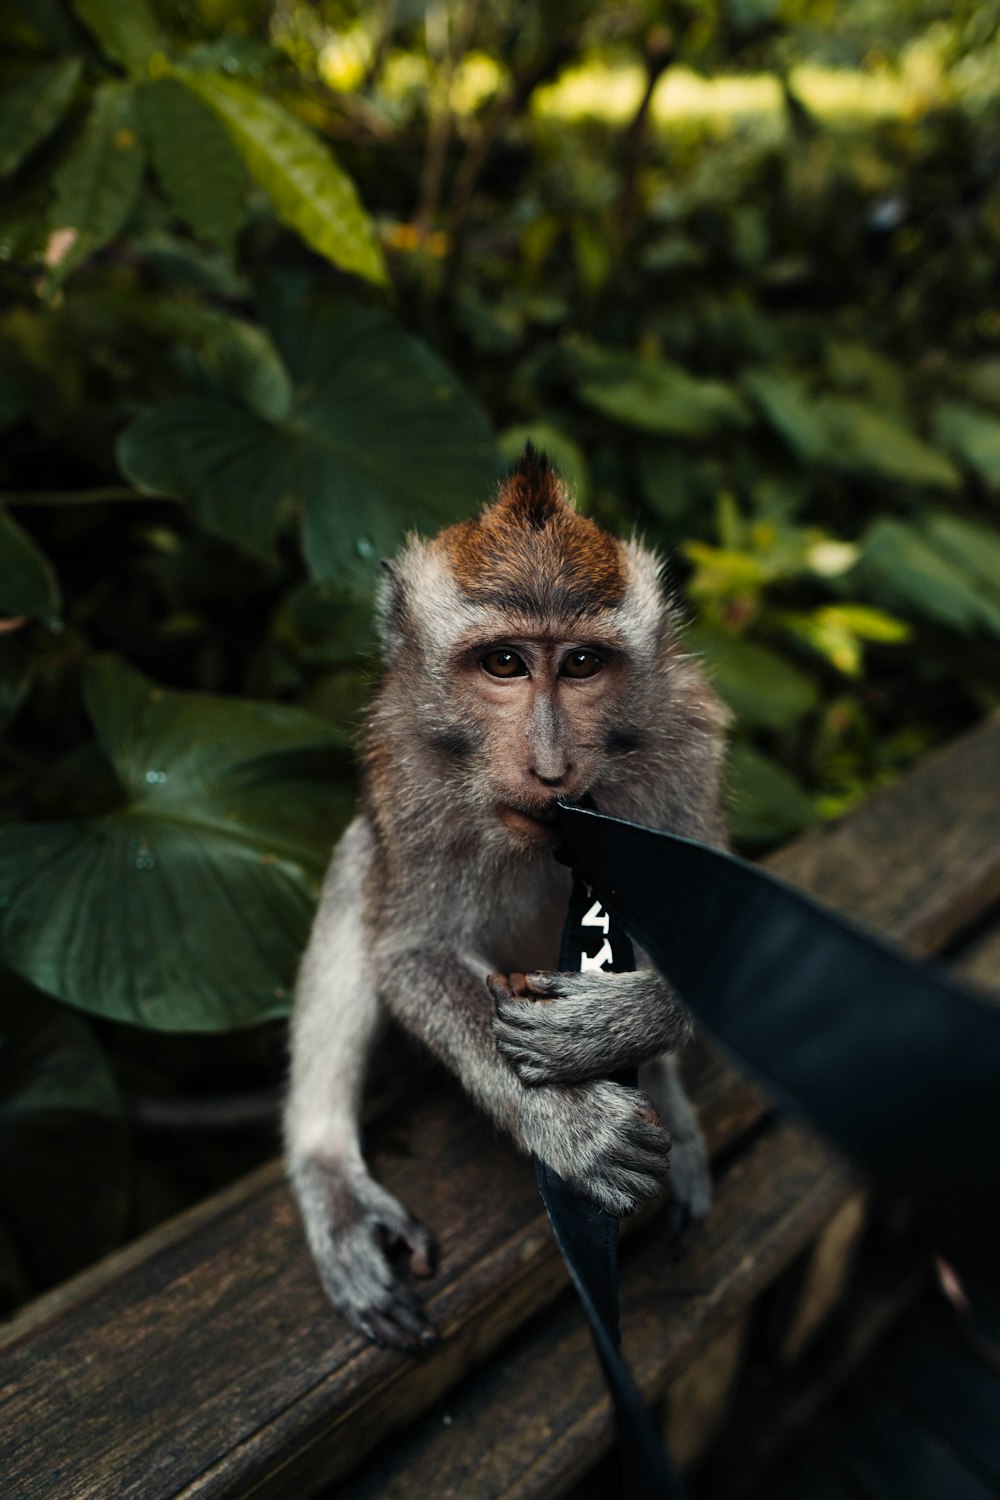 a monkey sitting on a bench holding a knife